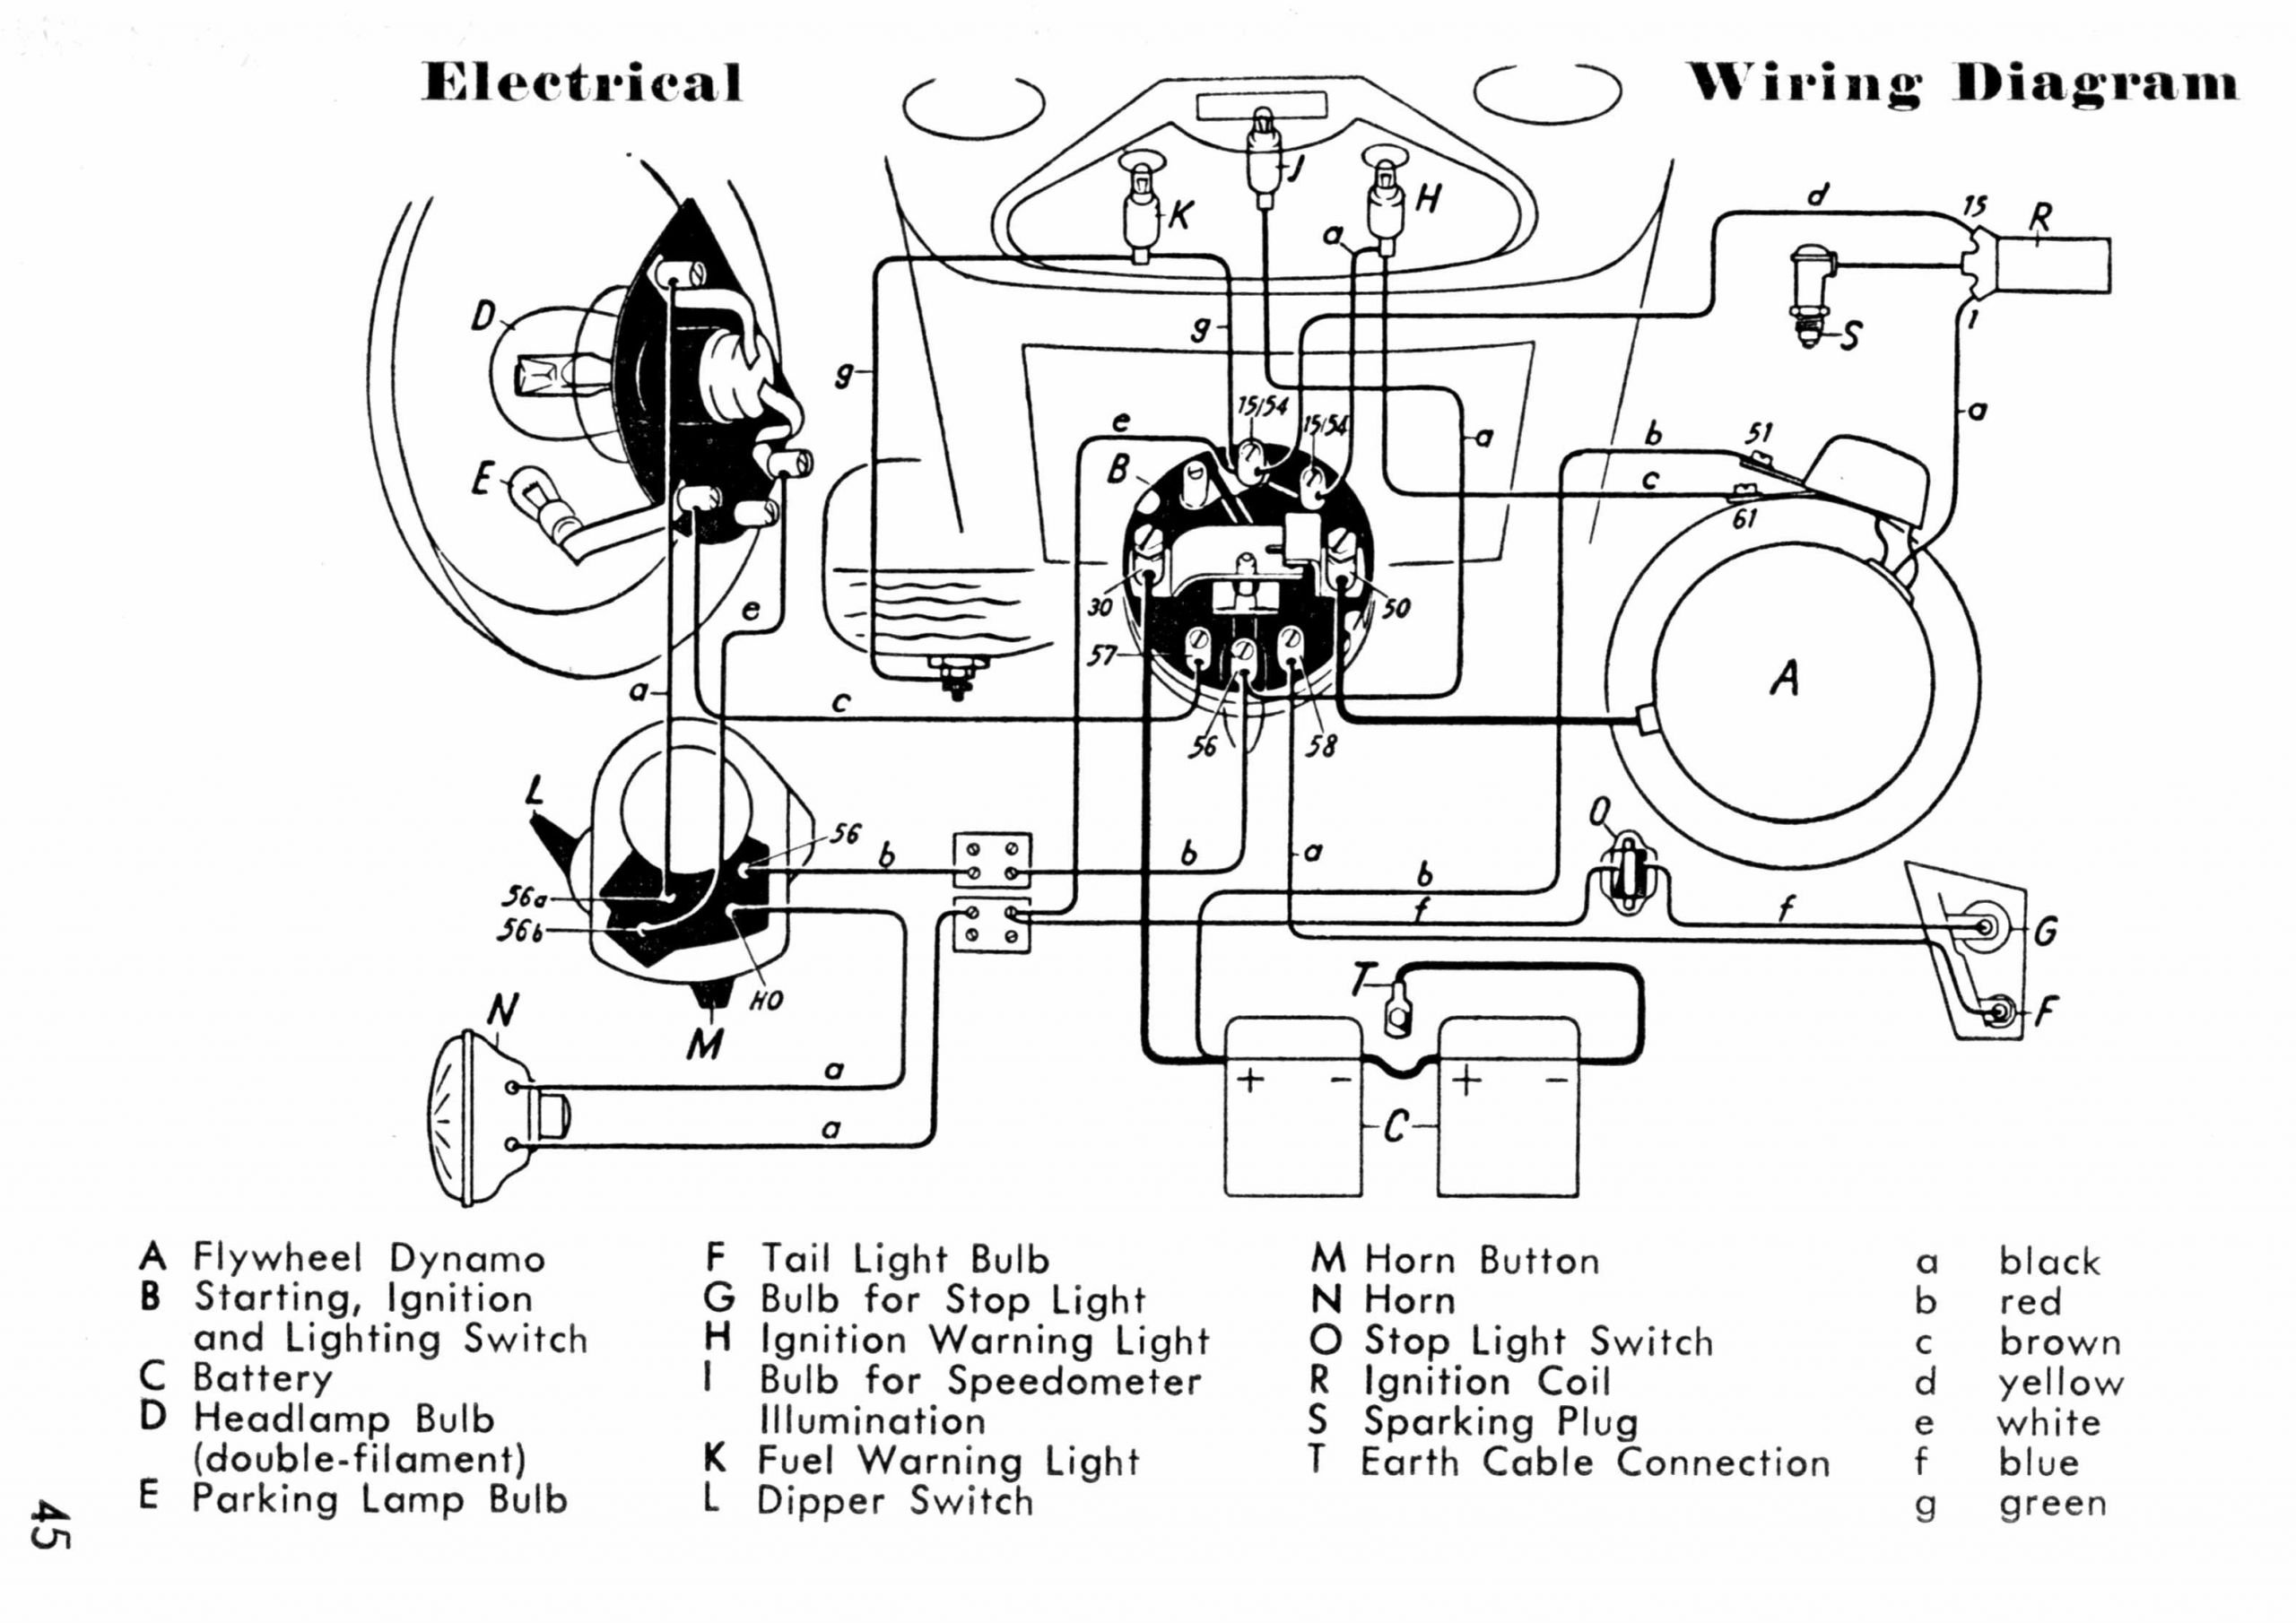 Wiring Diagram for A 24volt Dc Brushless Motor Tdpro 24v 500w Wiring Diagram Of Wiring Diagram for A 24volt Dc Brushless Motor